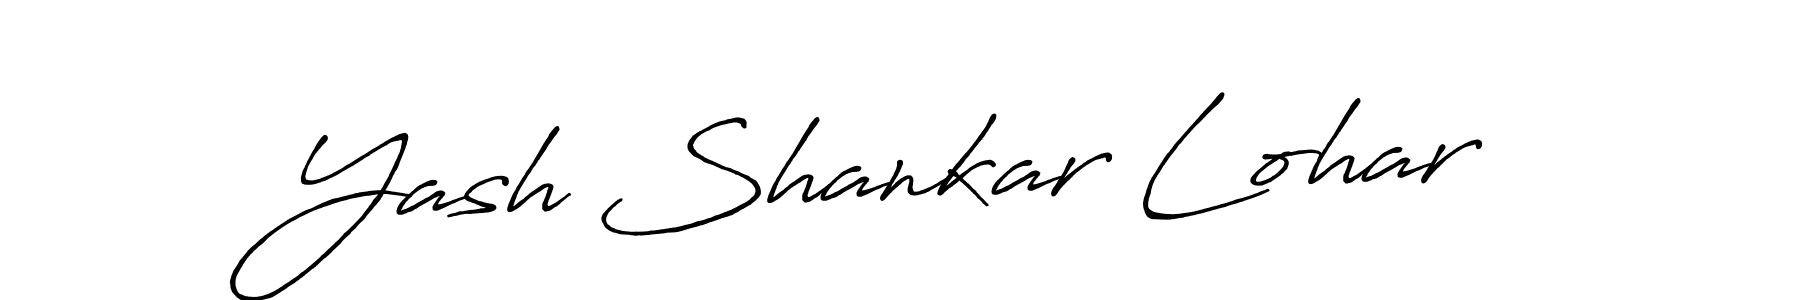 How to Draw Yash Shankar Lohar signature style? Antro_Vectra_Bolder is a latest design signature styles for name Yash Shankar Lohar. Yash Shankar Lohar signature style 7 images and pictures png